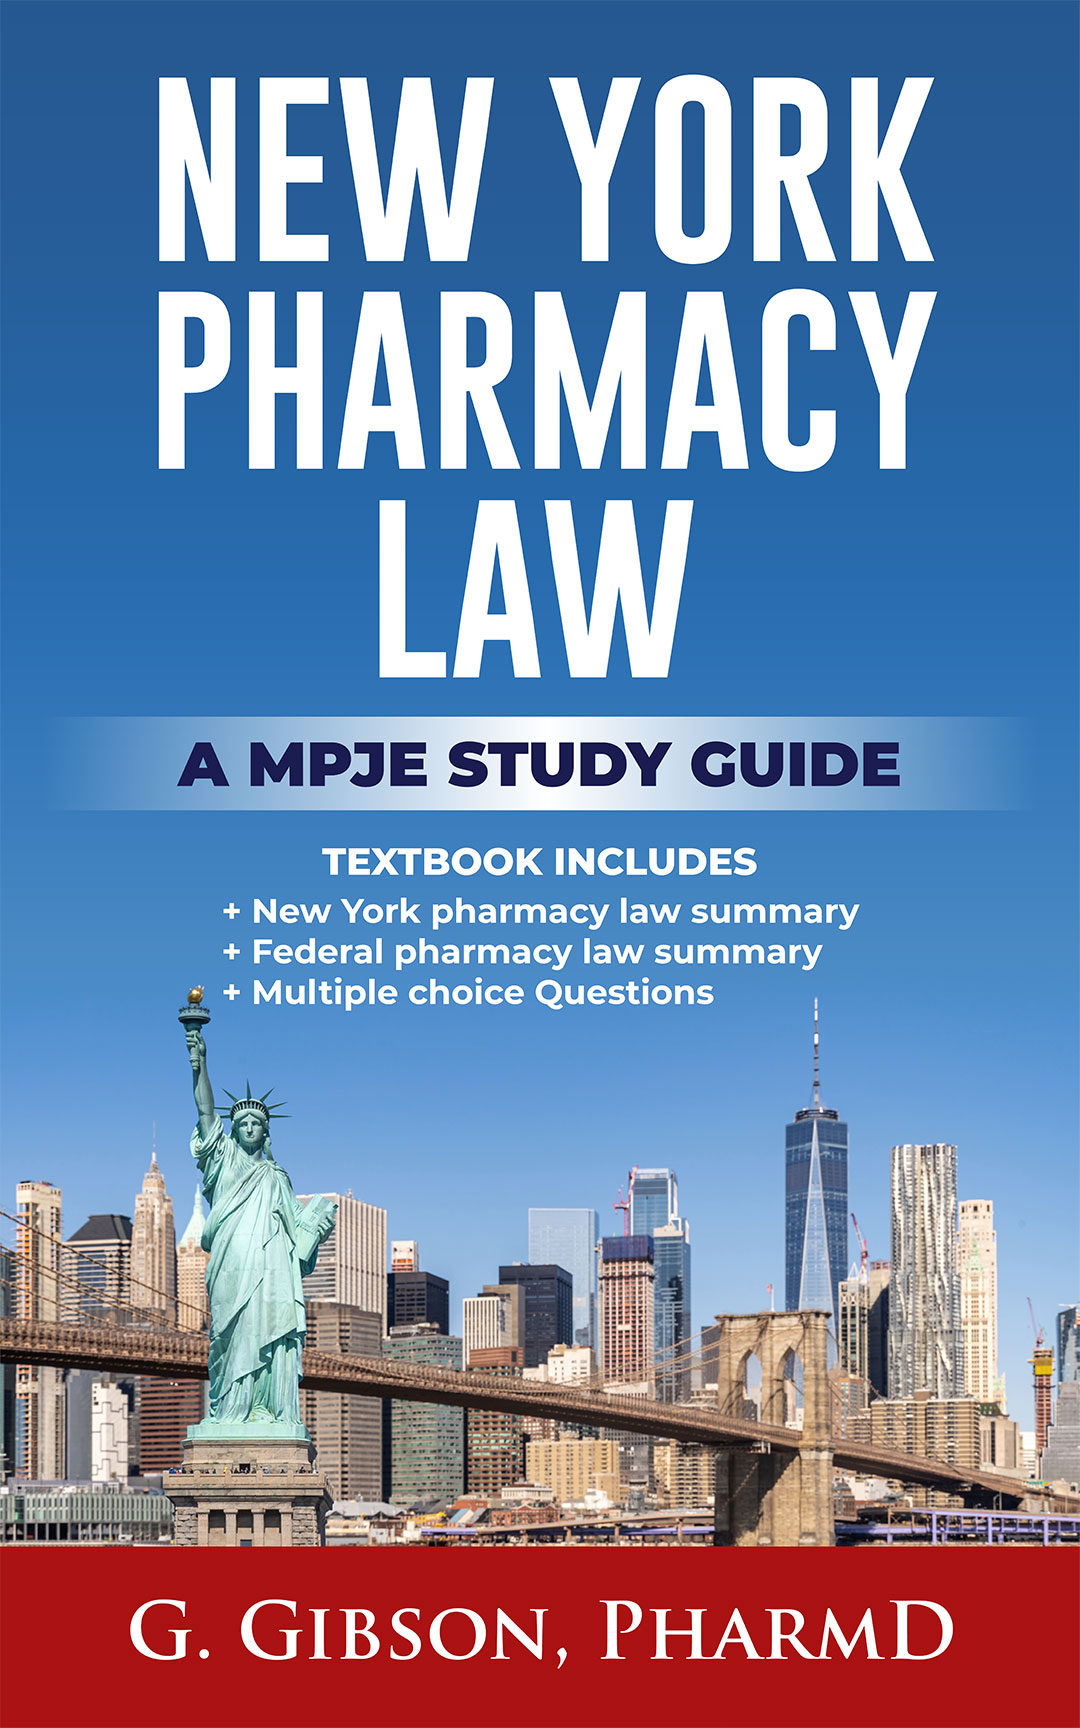 New York Pharmacy Law: A MPJE Study Guide